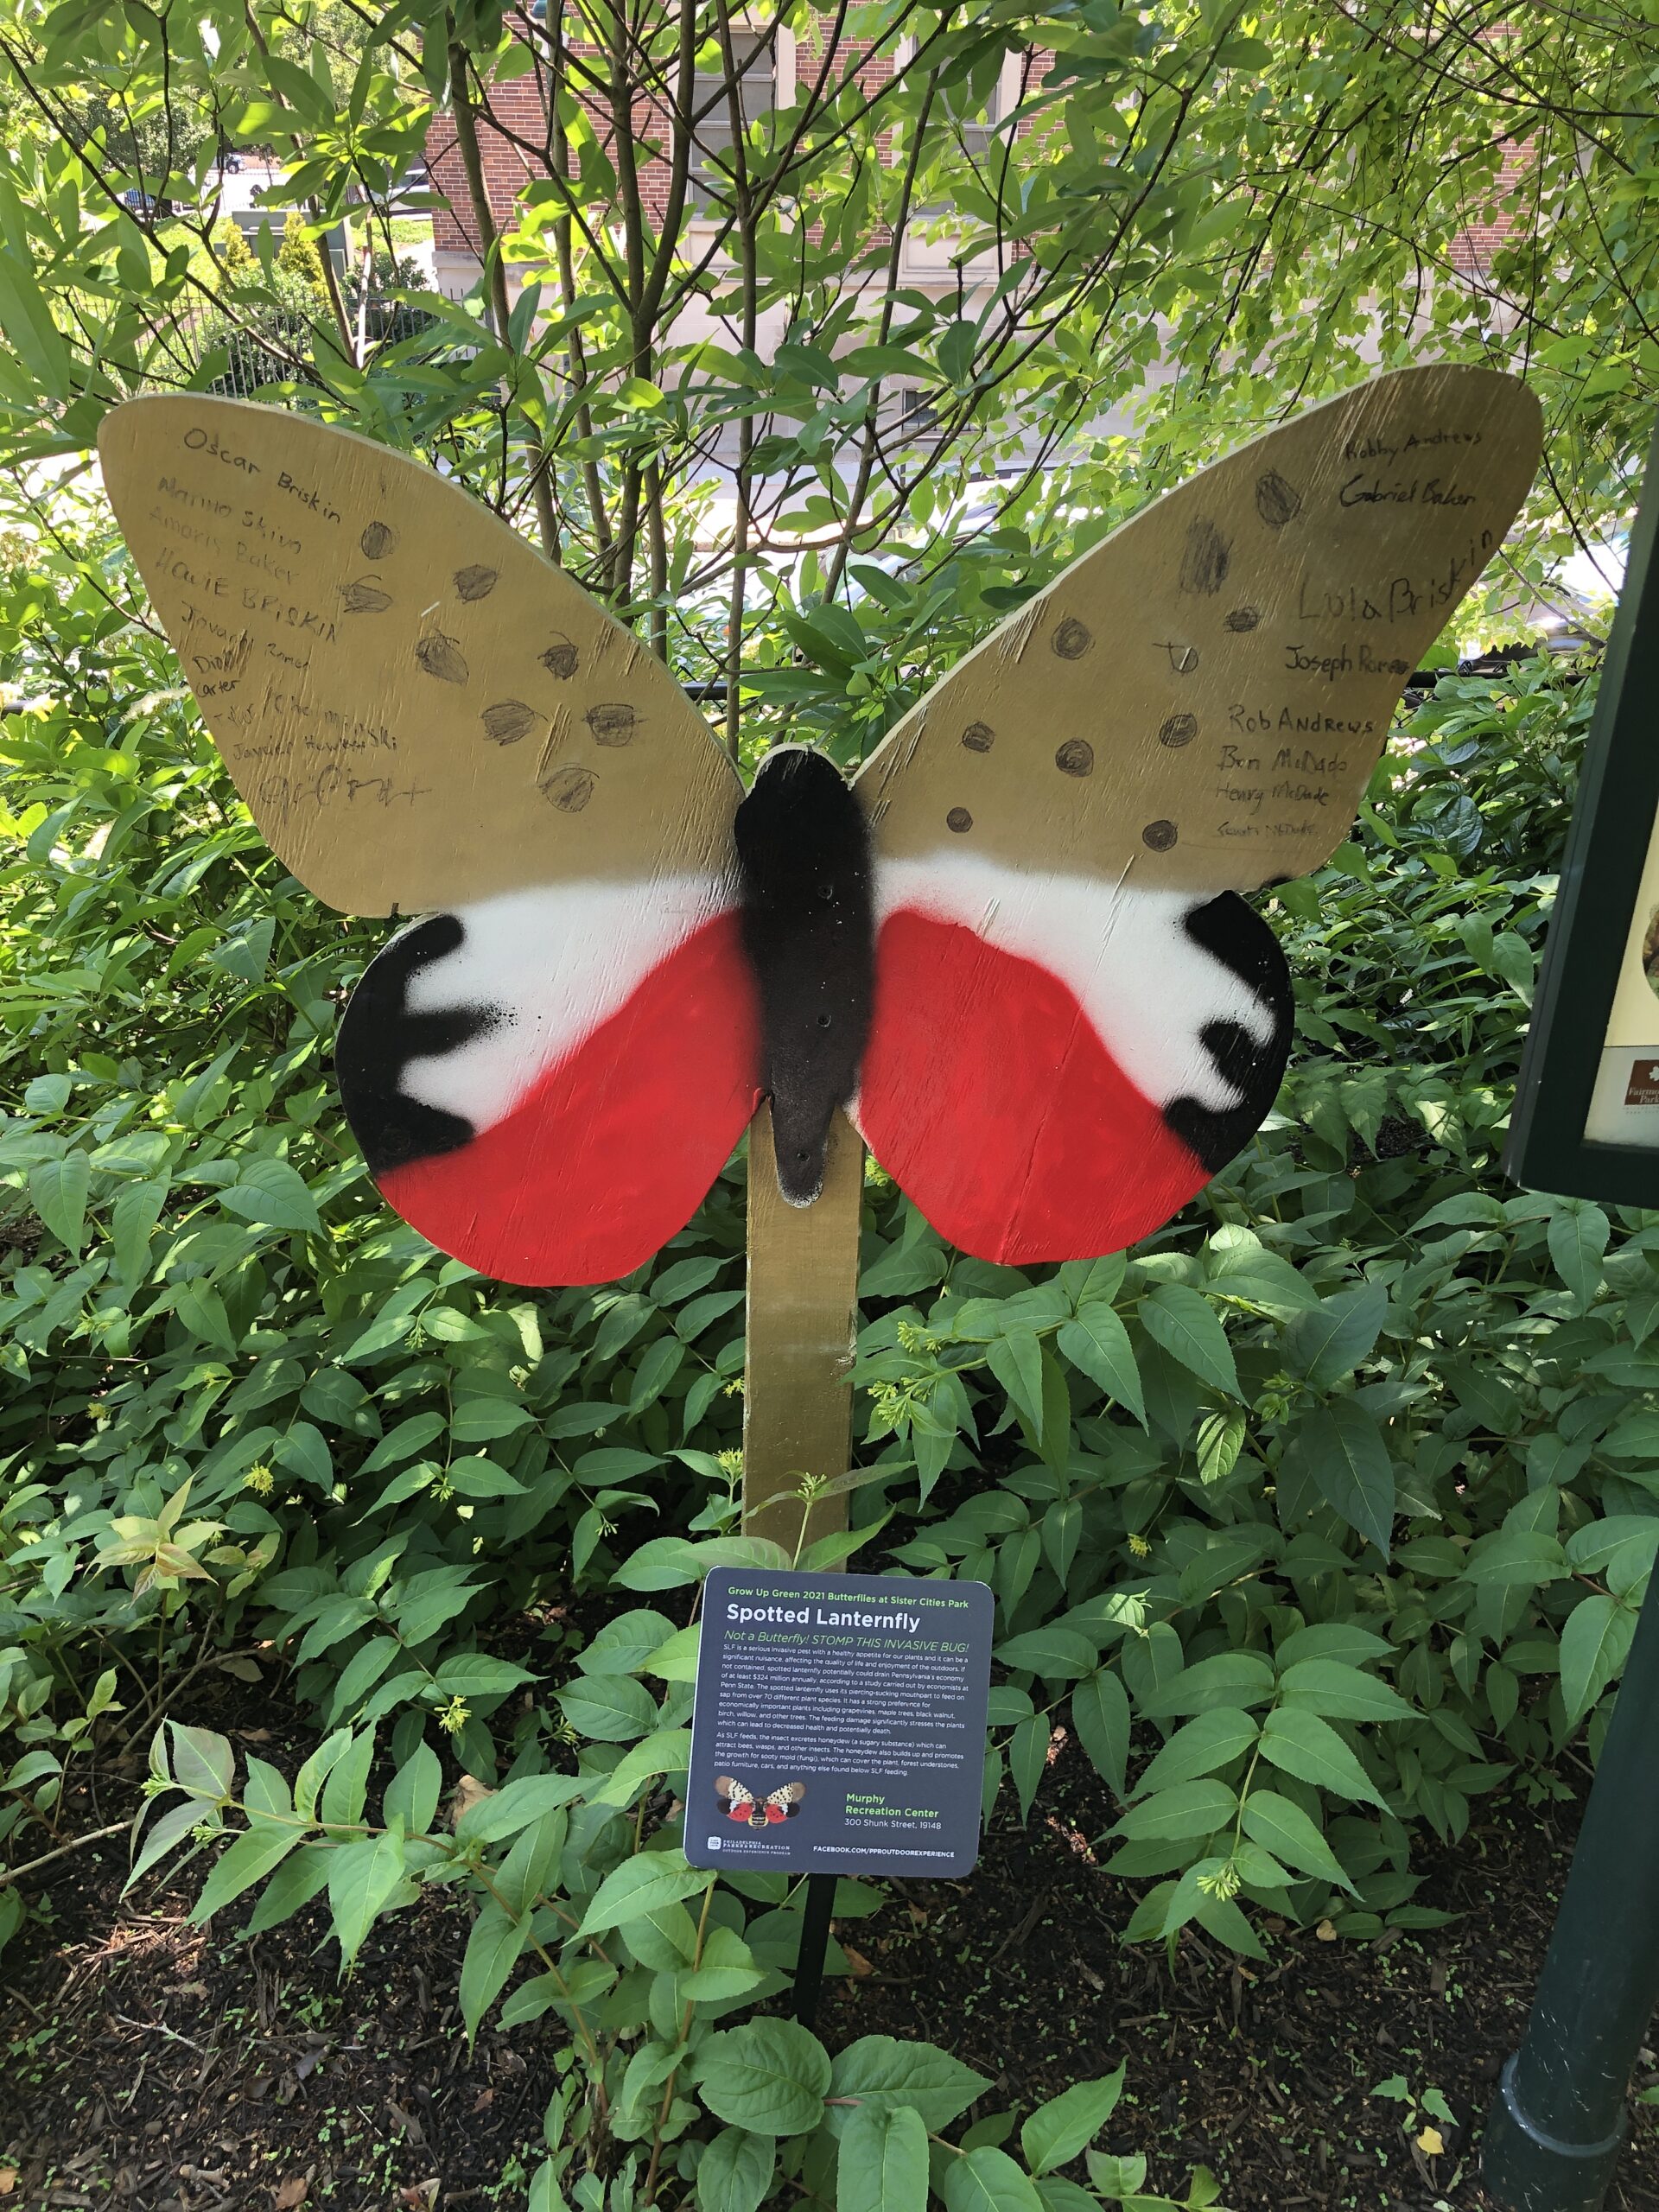 Spotted Lanternfly art exhibit